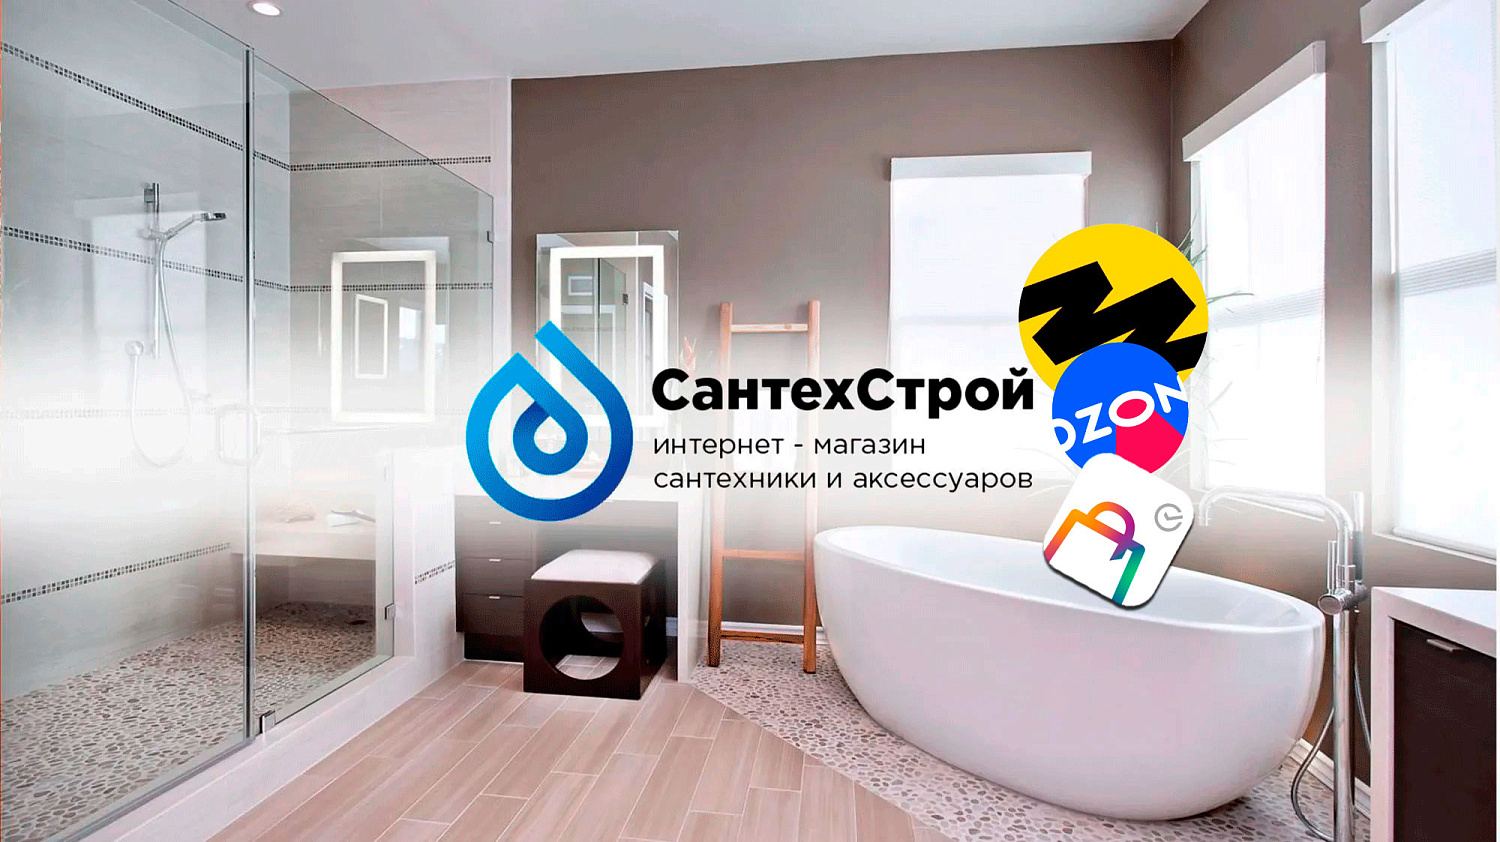 Сантехcтрой Групп - на OZON, Яндекс Маркет и Мега Маркет